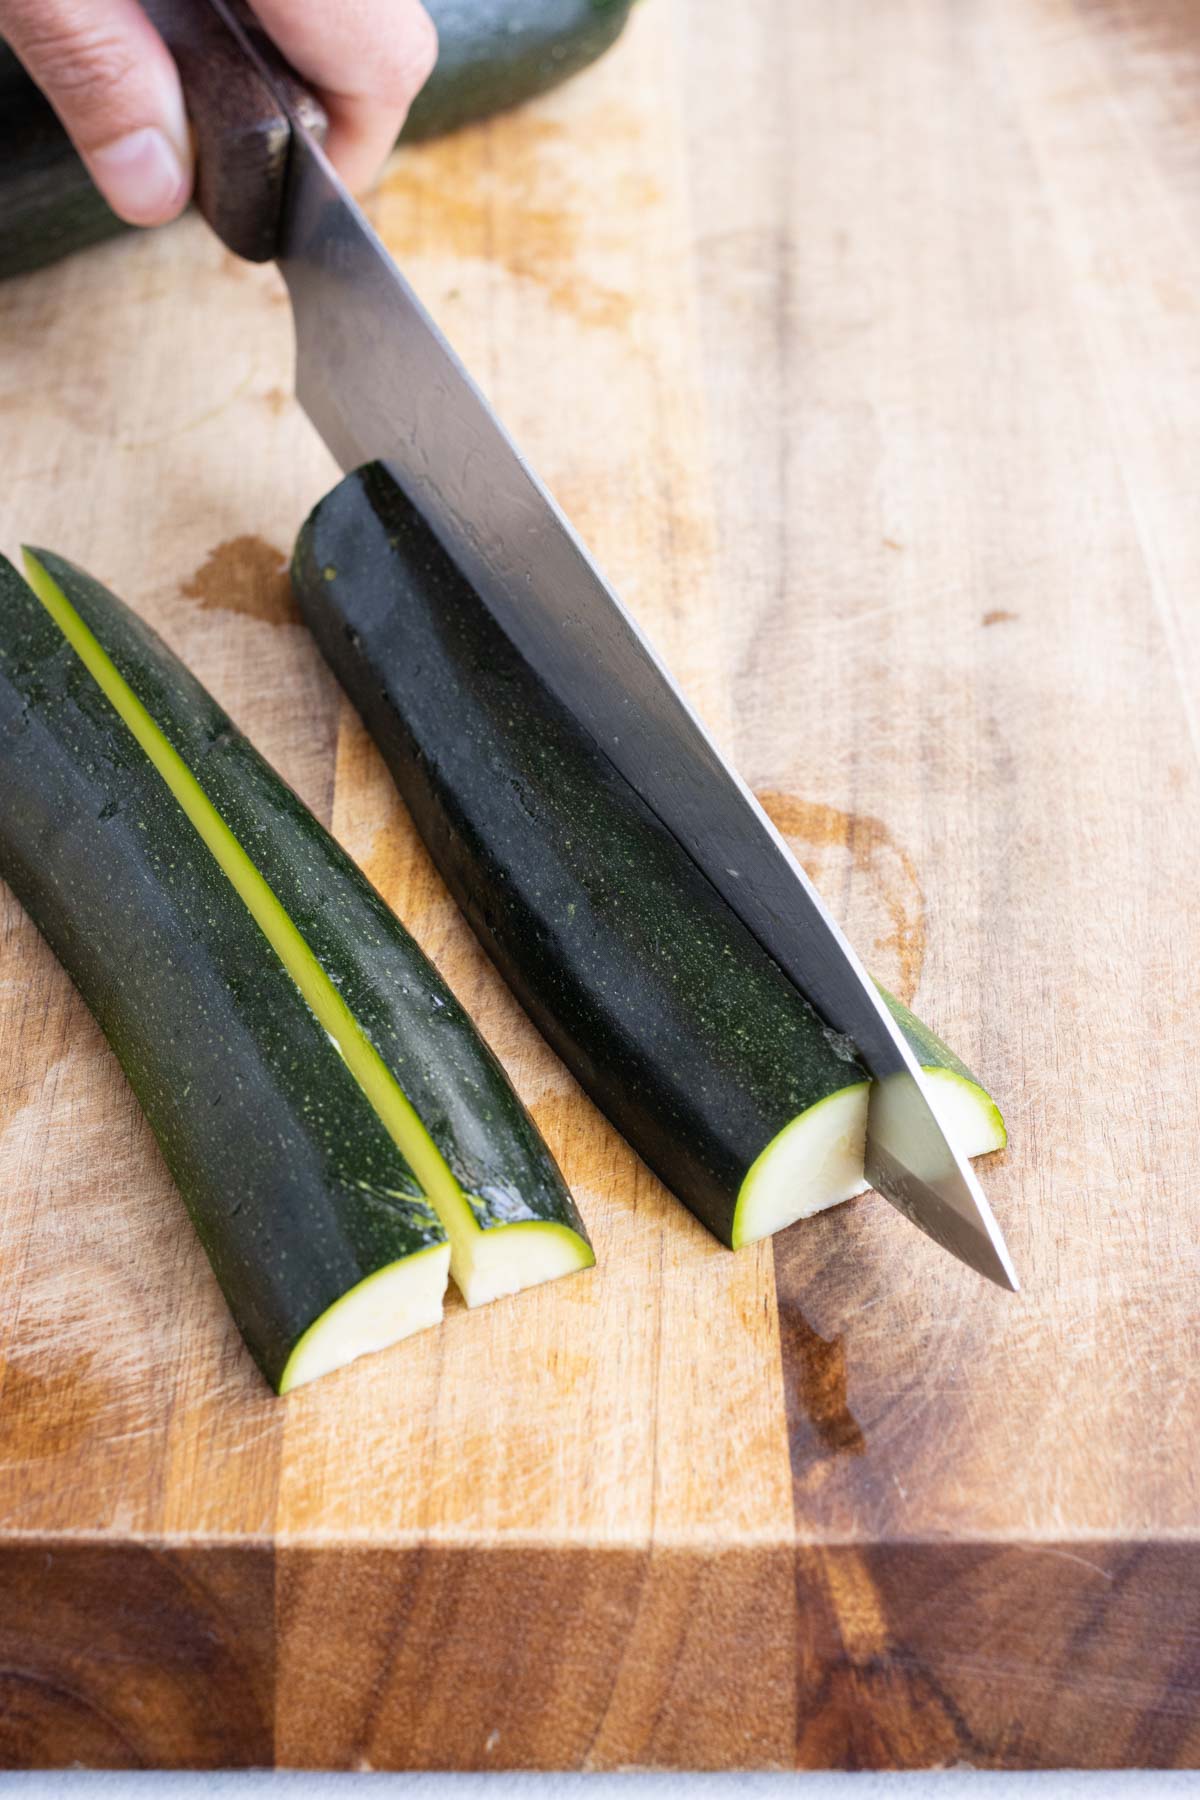 A knife slices a zucchini in quarters on a cutting board.